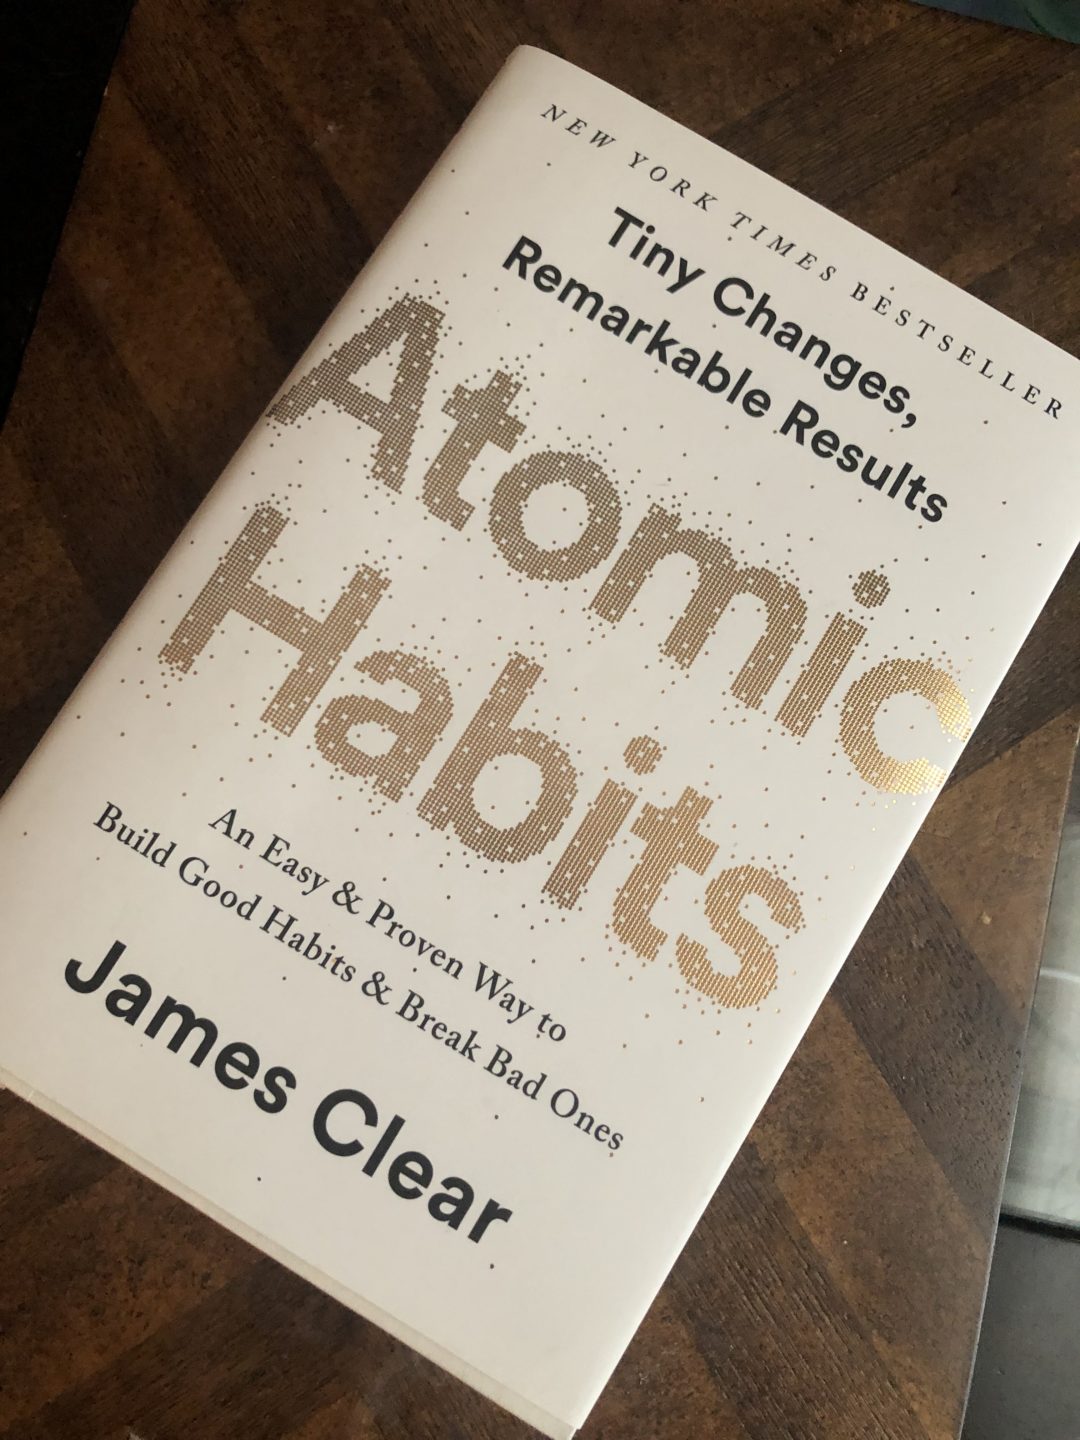 atomic habits book pdf online